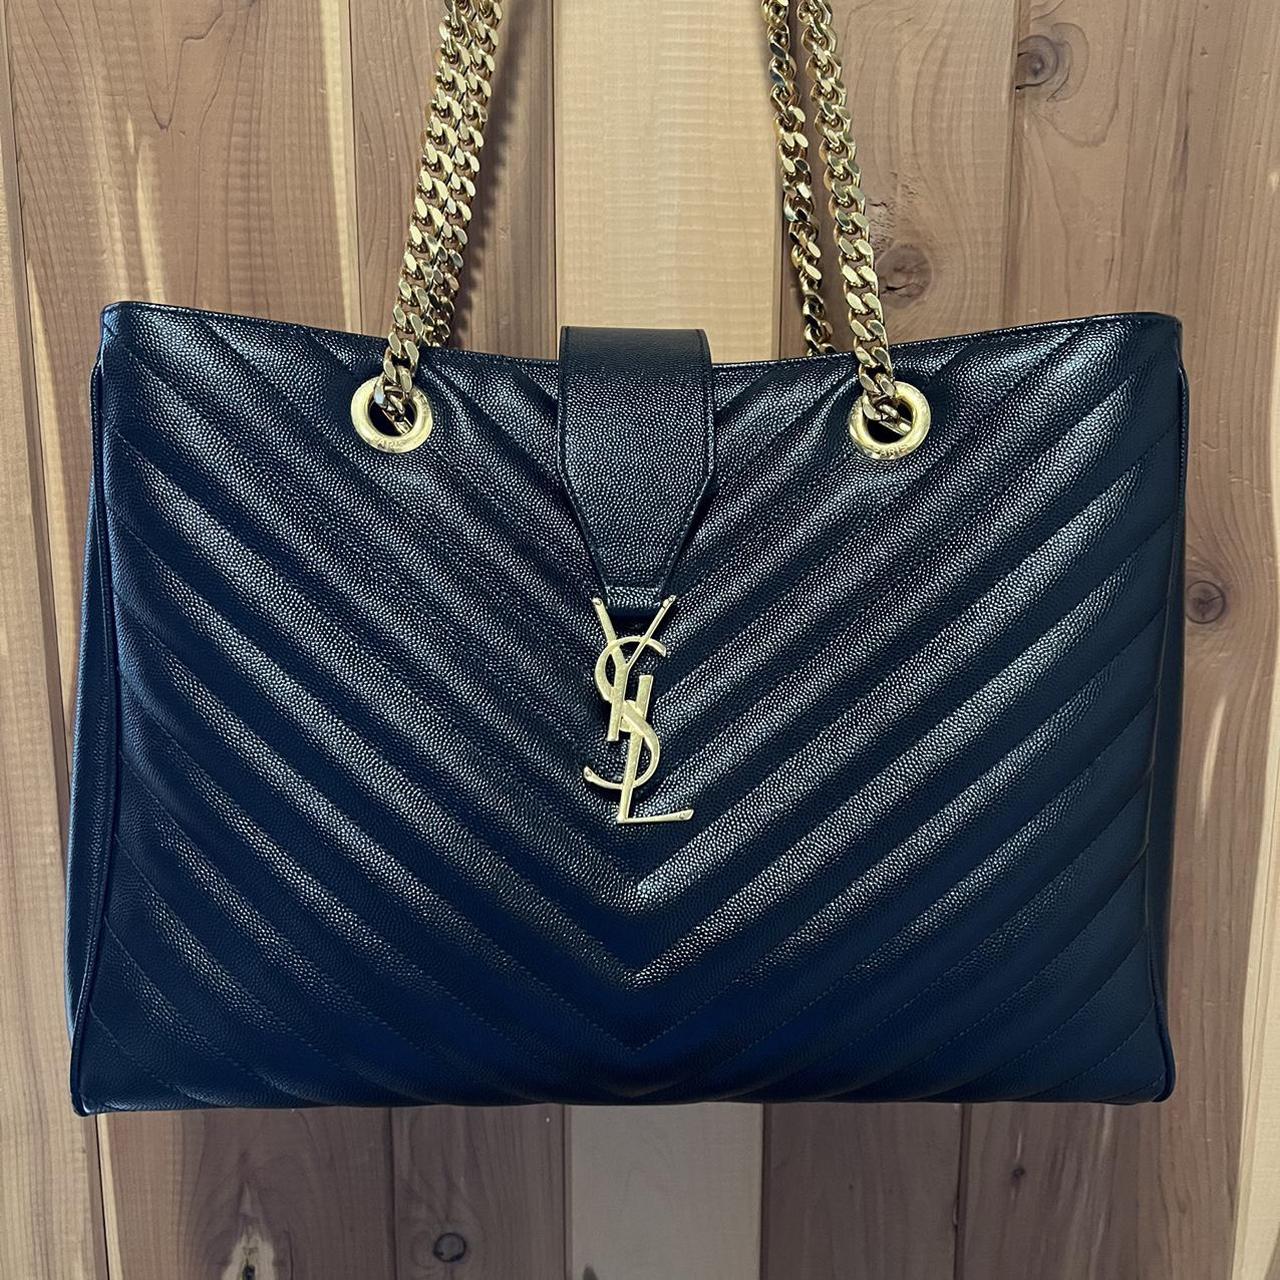 Yves Saint Laurent Handbags for sale in Clay, California | Facebook  Marketplace | Facebook